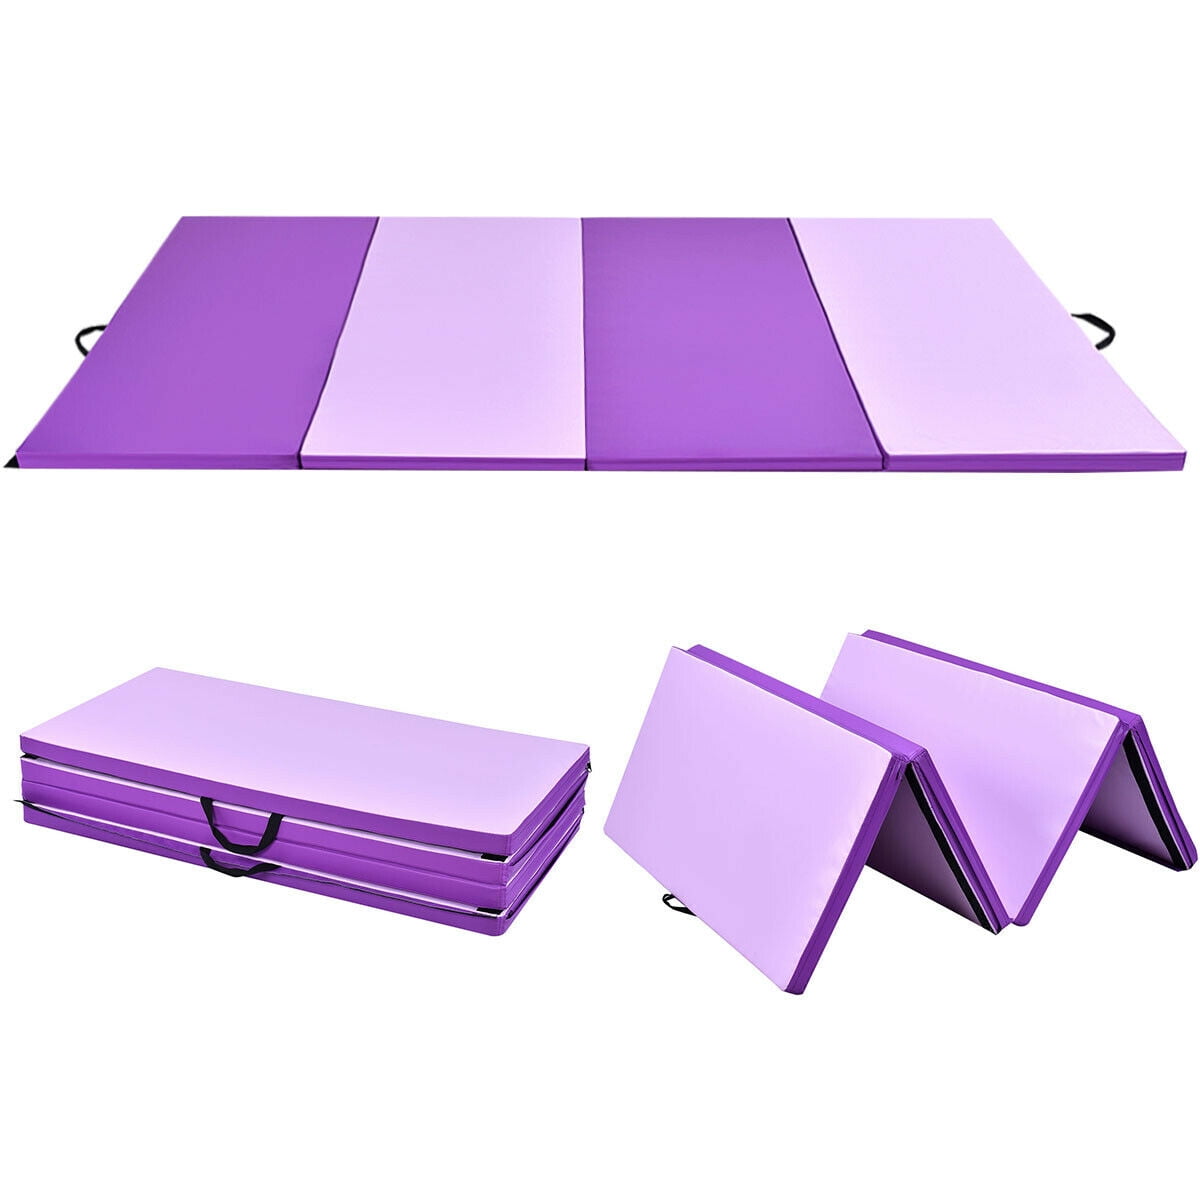 Details about   4x8x2" PU Gymnastics Mat Gym Folding Panel Yoga Exercise Tumbling Pad 4 Colors 